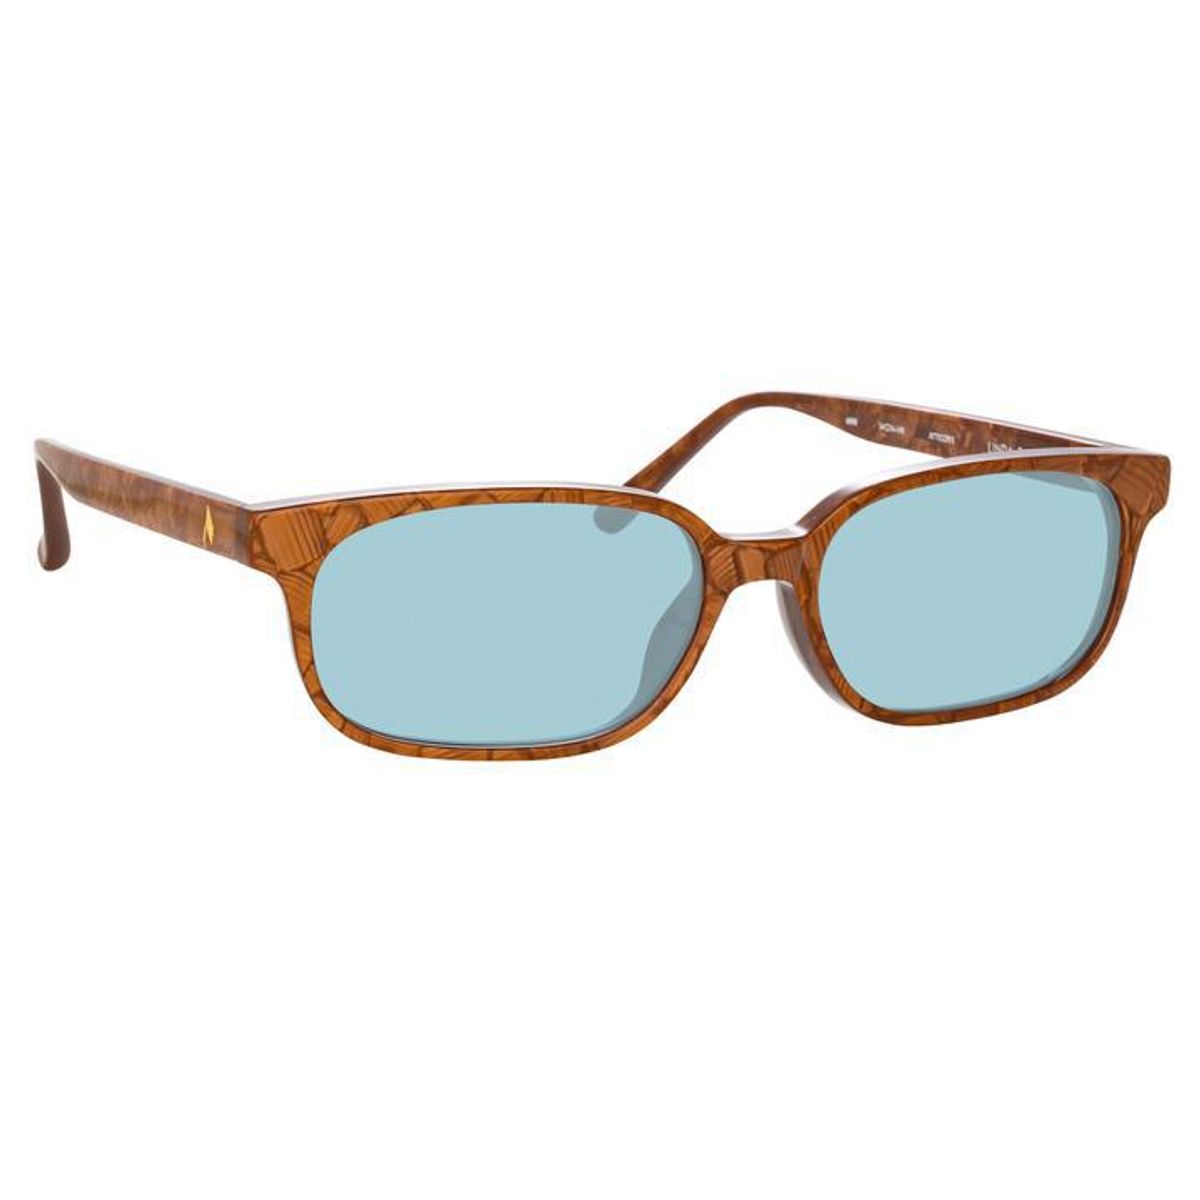 Gigi Rectangular Sunglasses in Brown and Turquoise